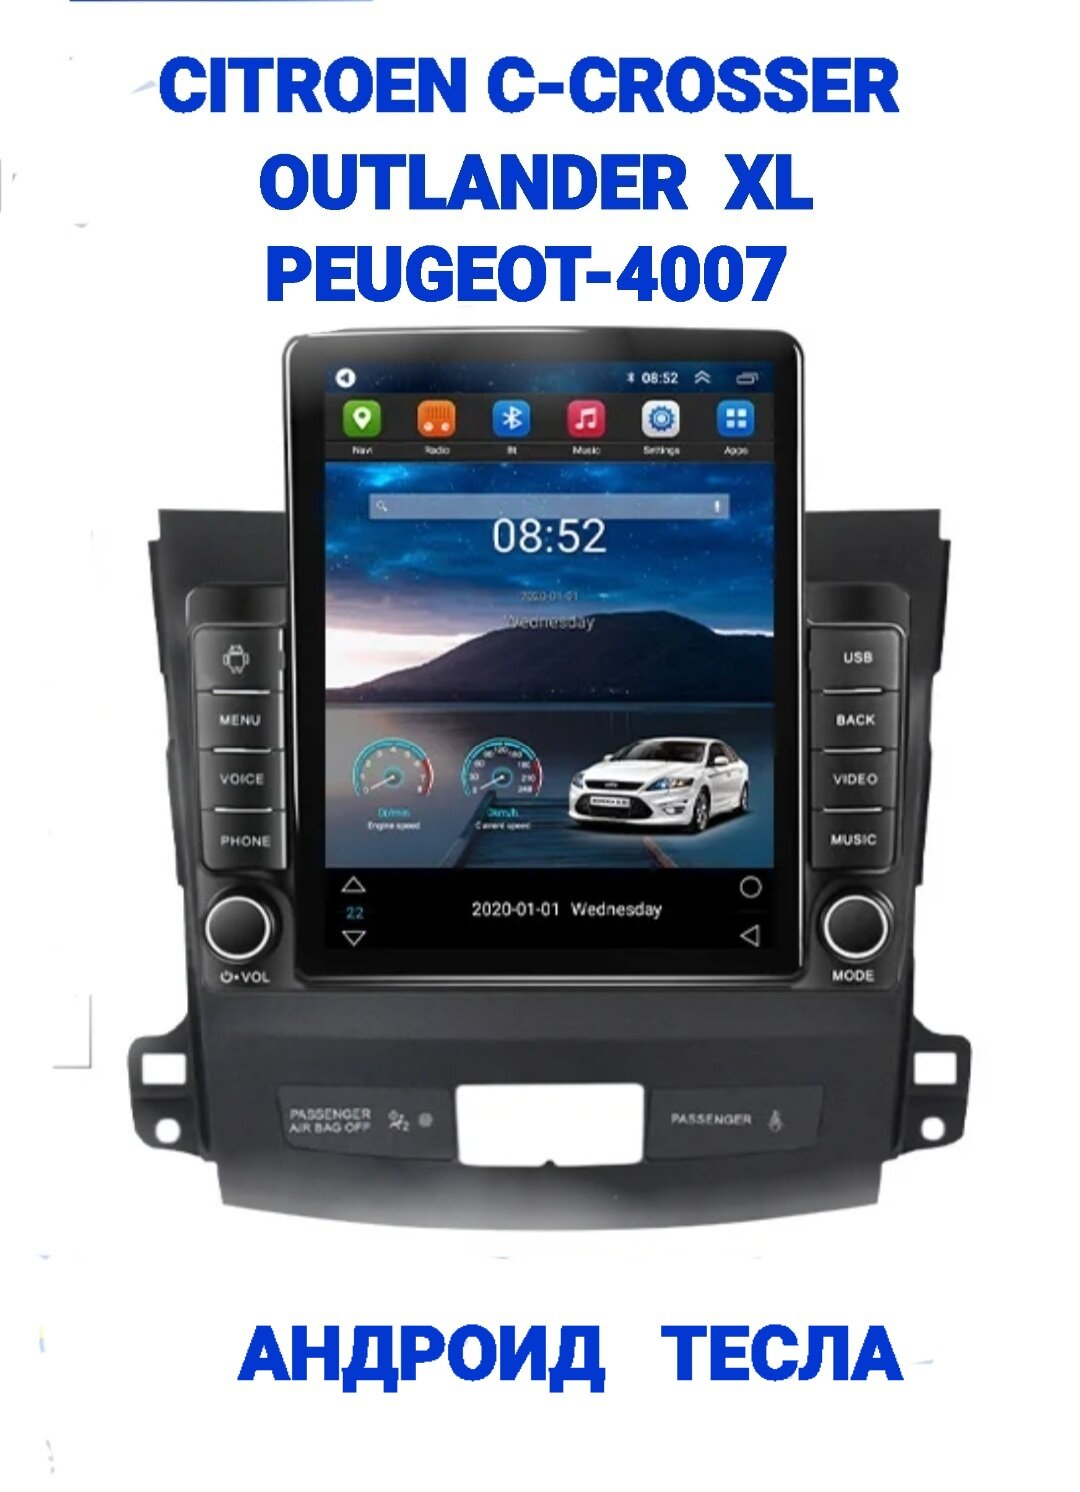 Магнитола Тесла Пионер (Tesla Pioneer) WiFi, GPS, USB, Блютуз, CarPlay, андроид 14, для Мицубиси Аутлендер-2 (Mitsubishi Outlander XL, Peugeot 4007, Citroen C-Crosser) 2006-2012г